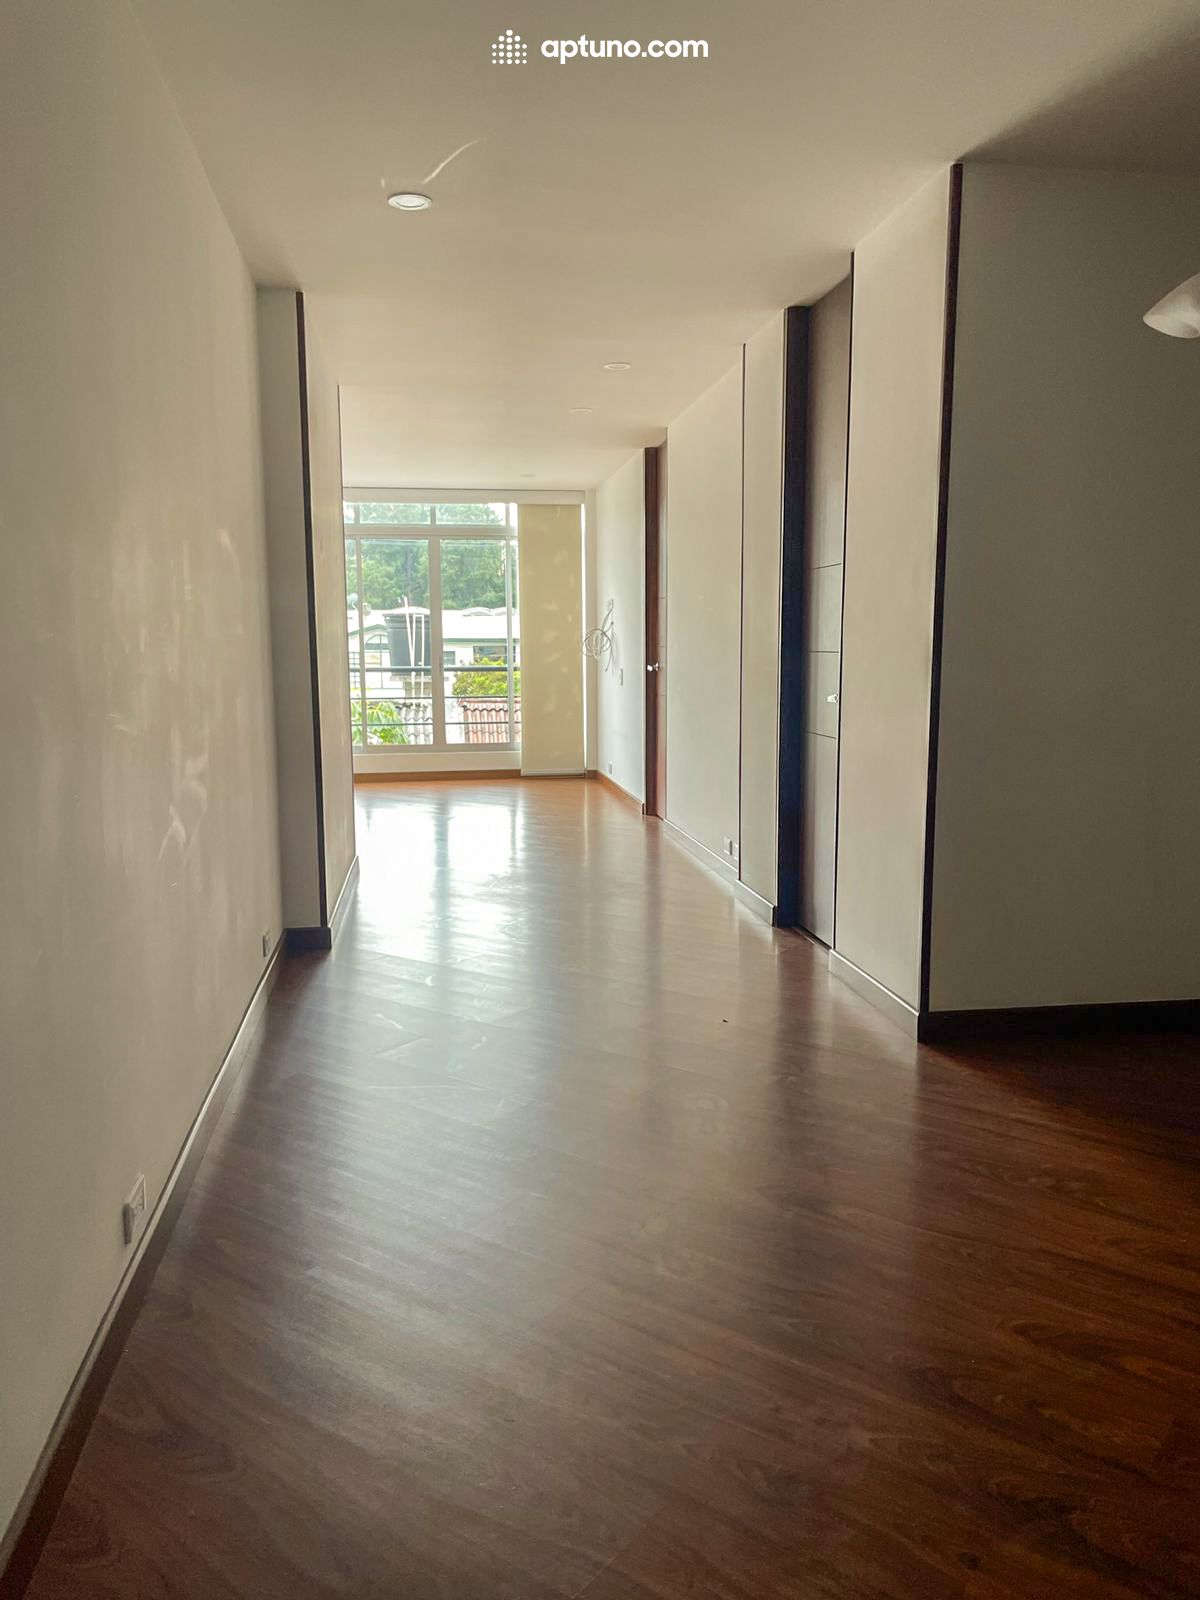 Apartamento en arriendo Lisboa 52 m² - $ 2.200.000